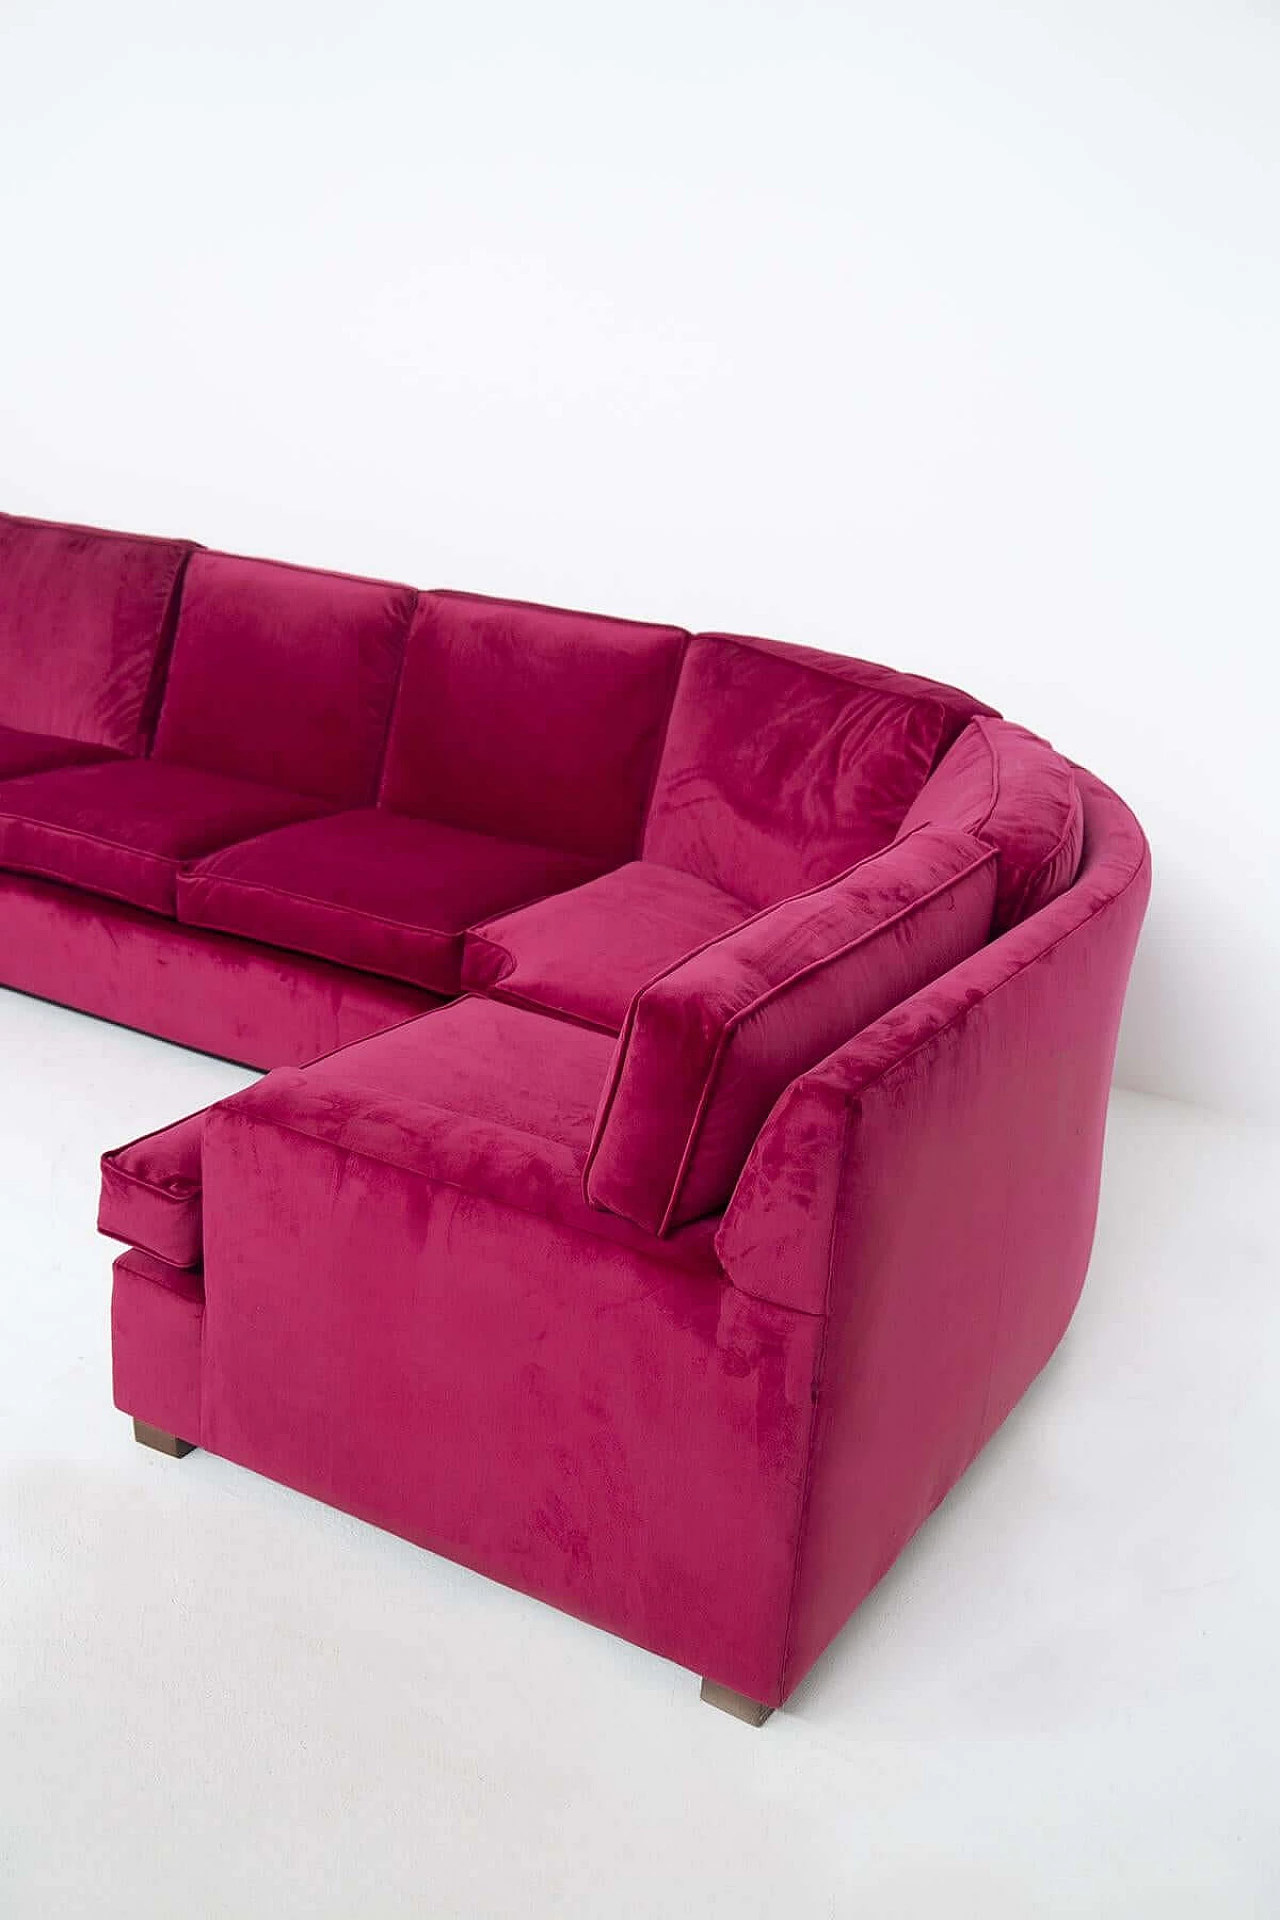 12-seater modular sofa attr. to Luigi Caccia Dominioni in dark fuchsia velvet, 1960s 1403117